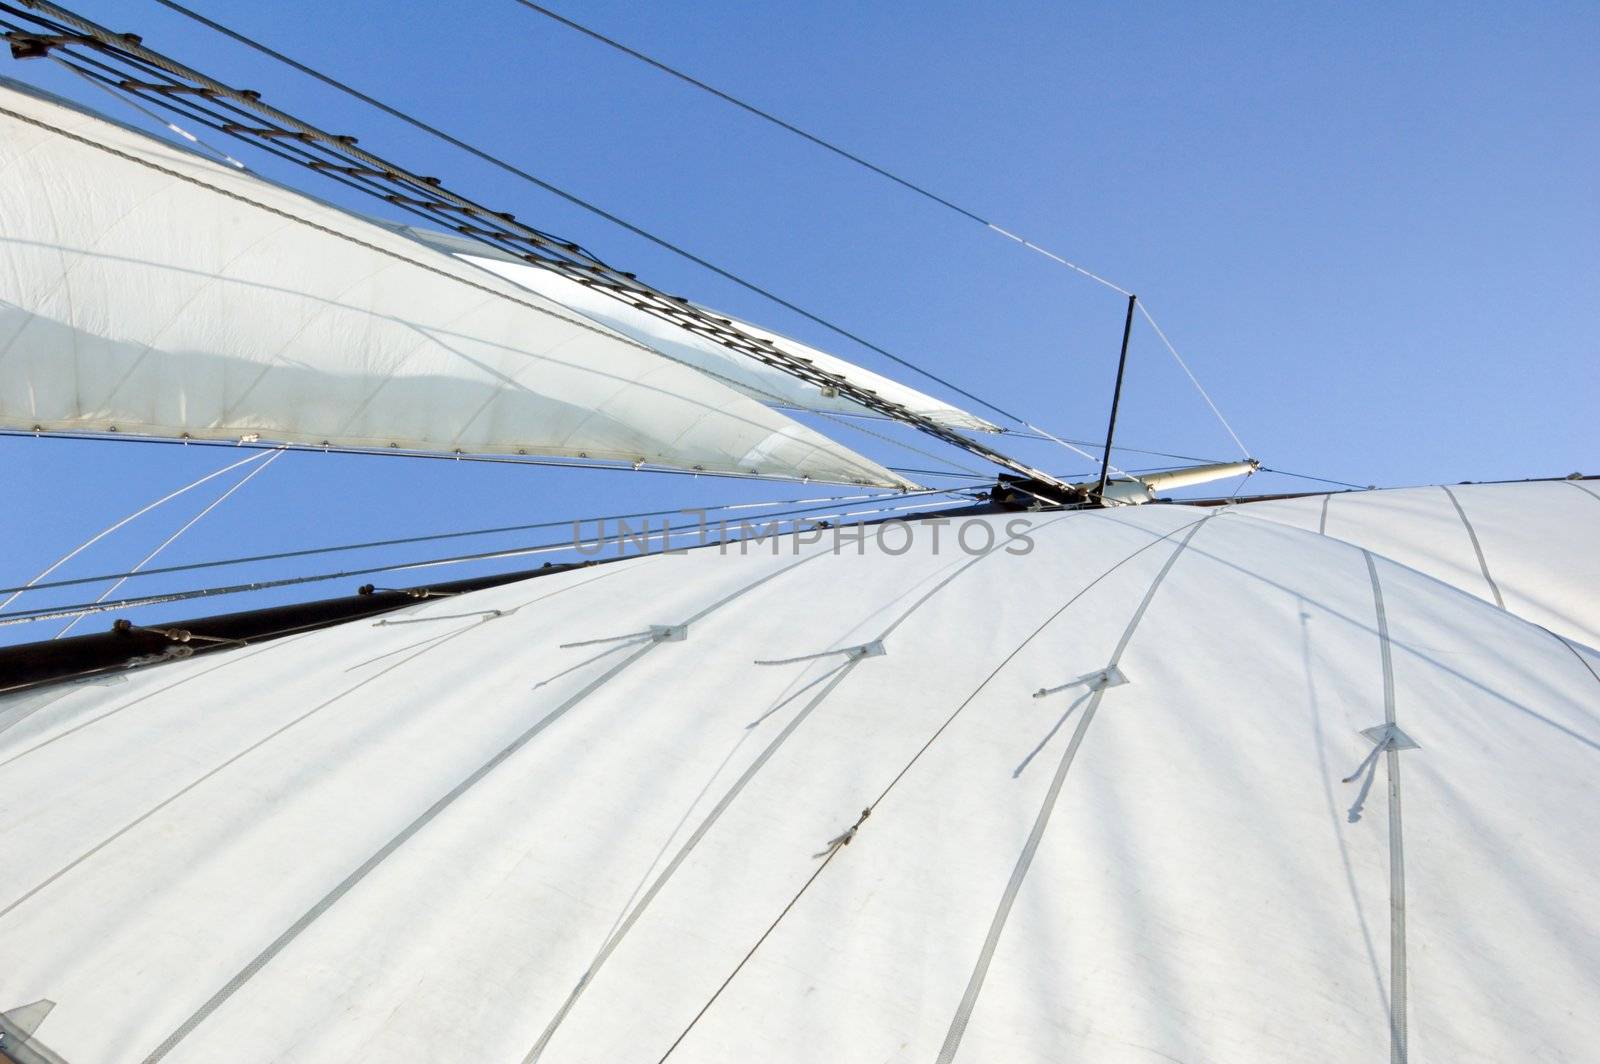 Big sail by PavelS